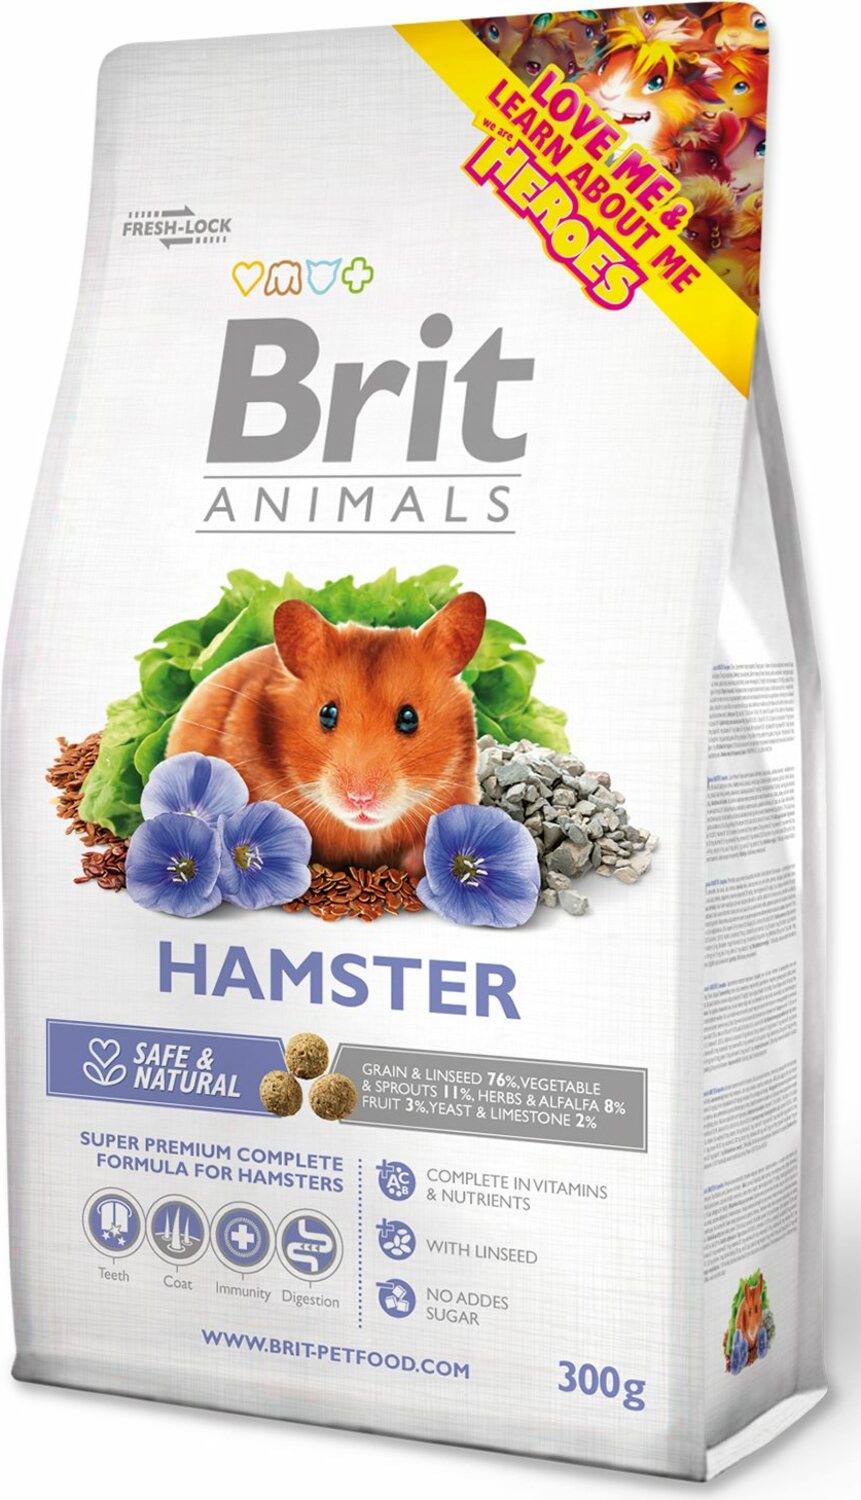 Krmivo Brit Animals Complete křeček 300g